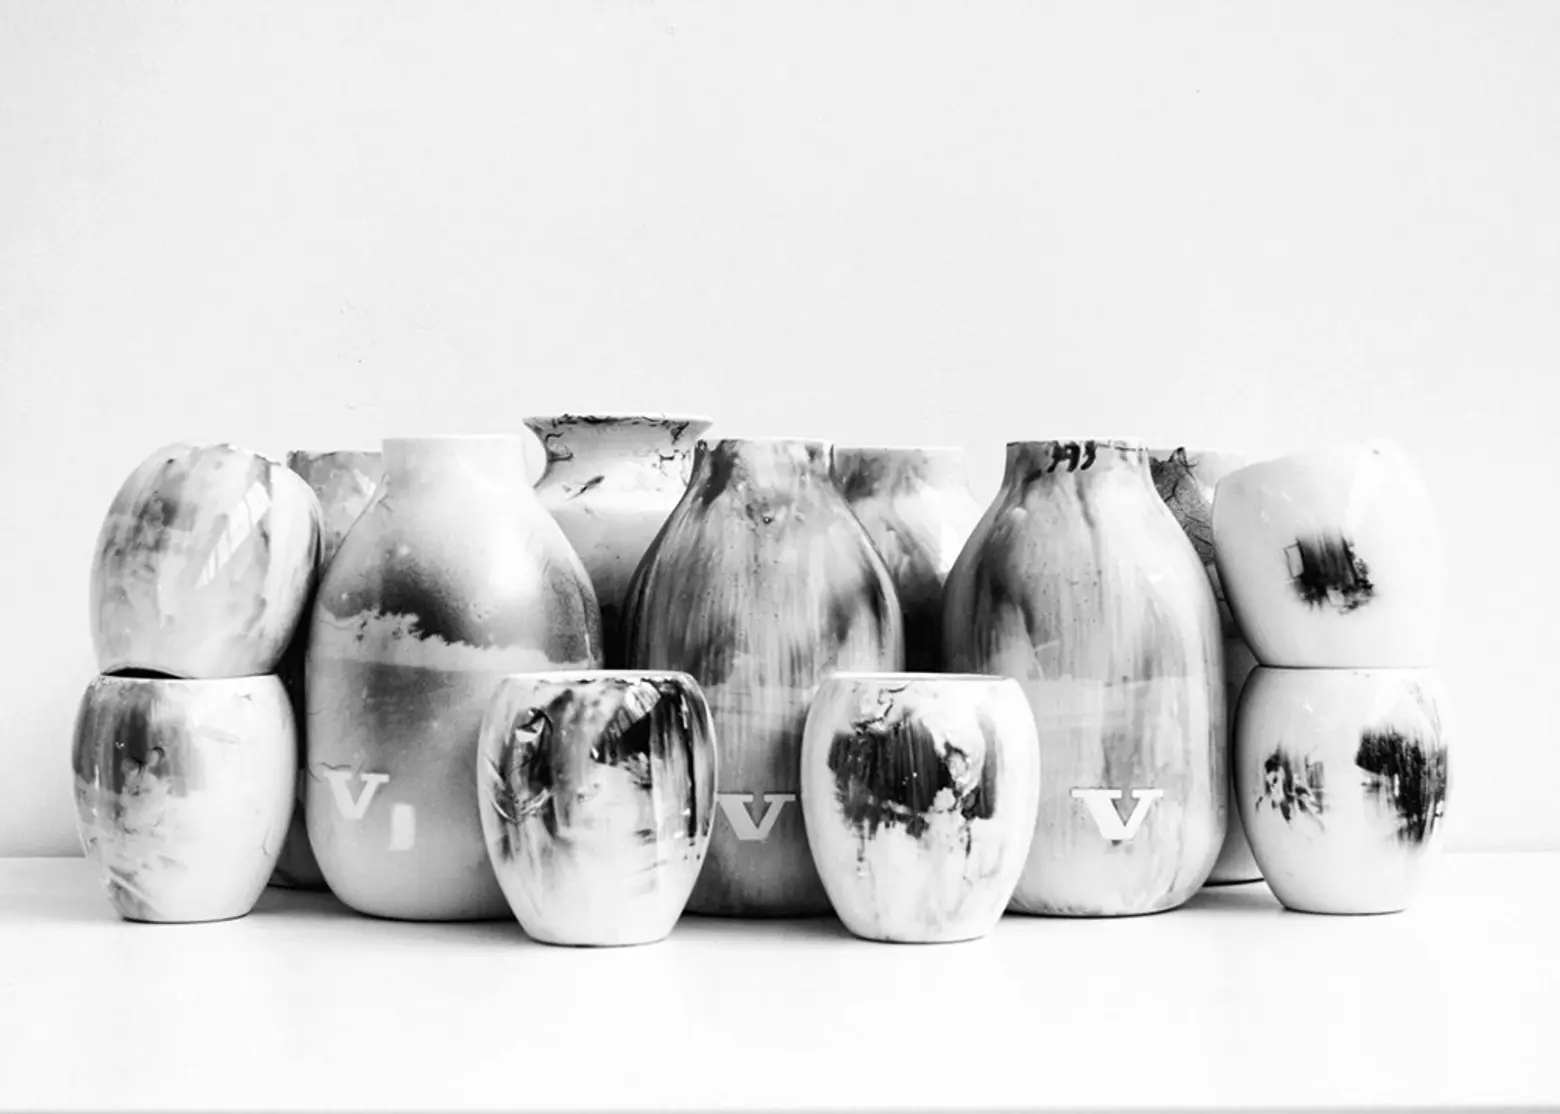 Mianne de Vries’s Photosensitive Vase Lets You Capture Your Own Image on Its Skin